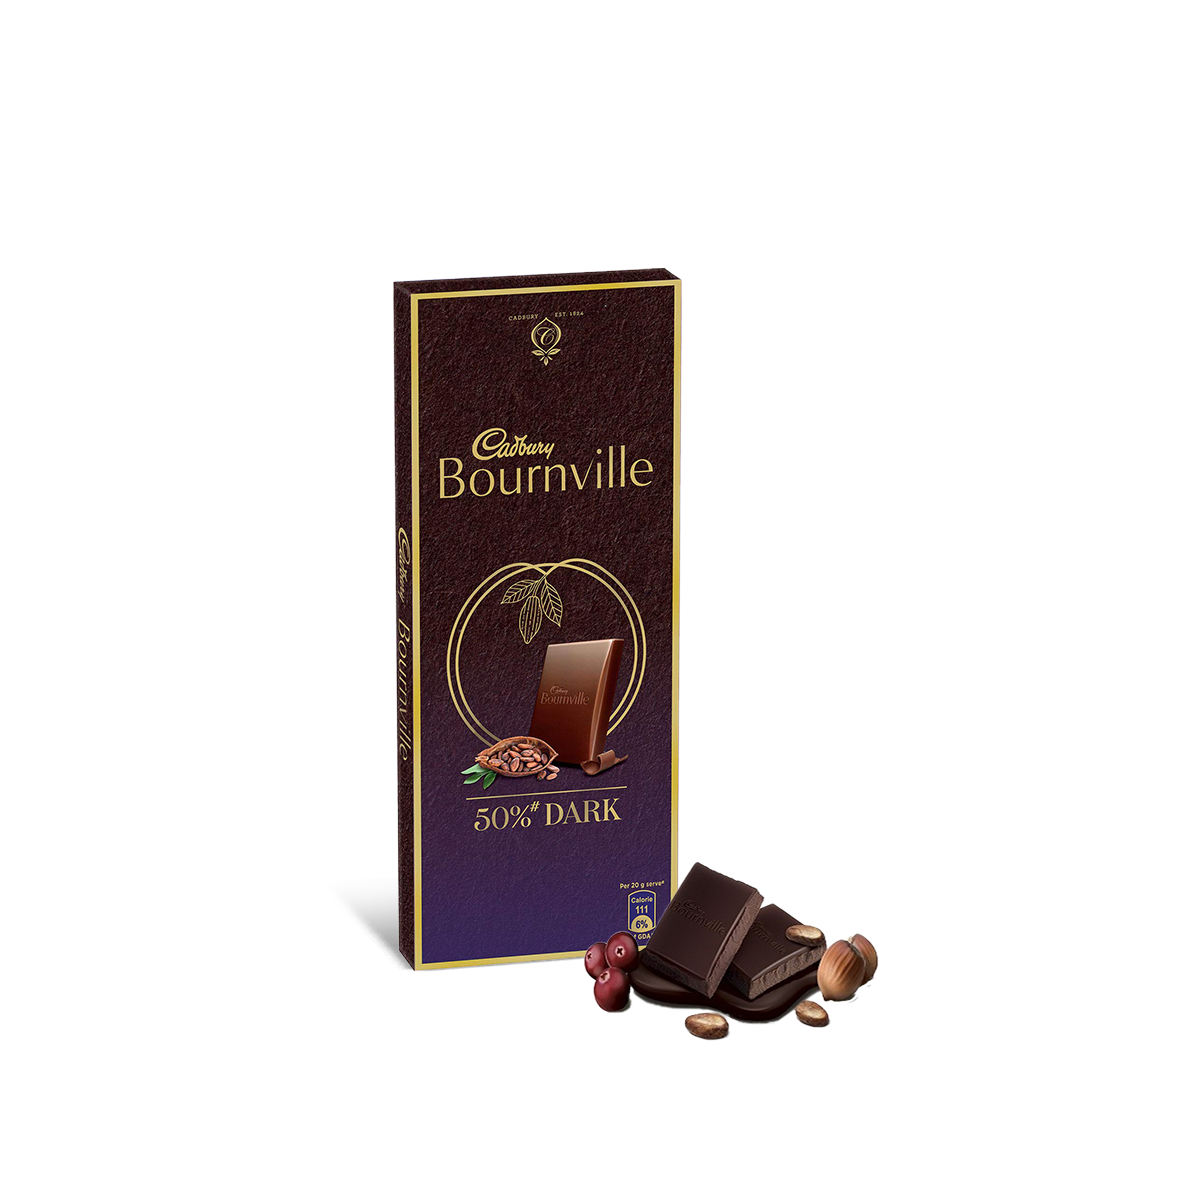 Cadbury Bournville 50% Dark Chocolate 80gm